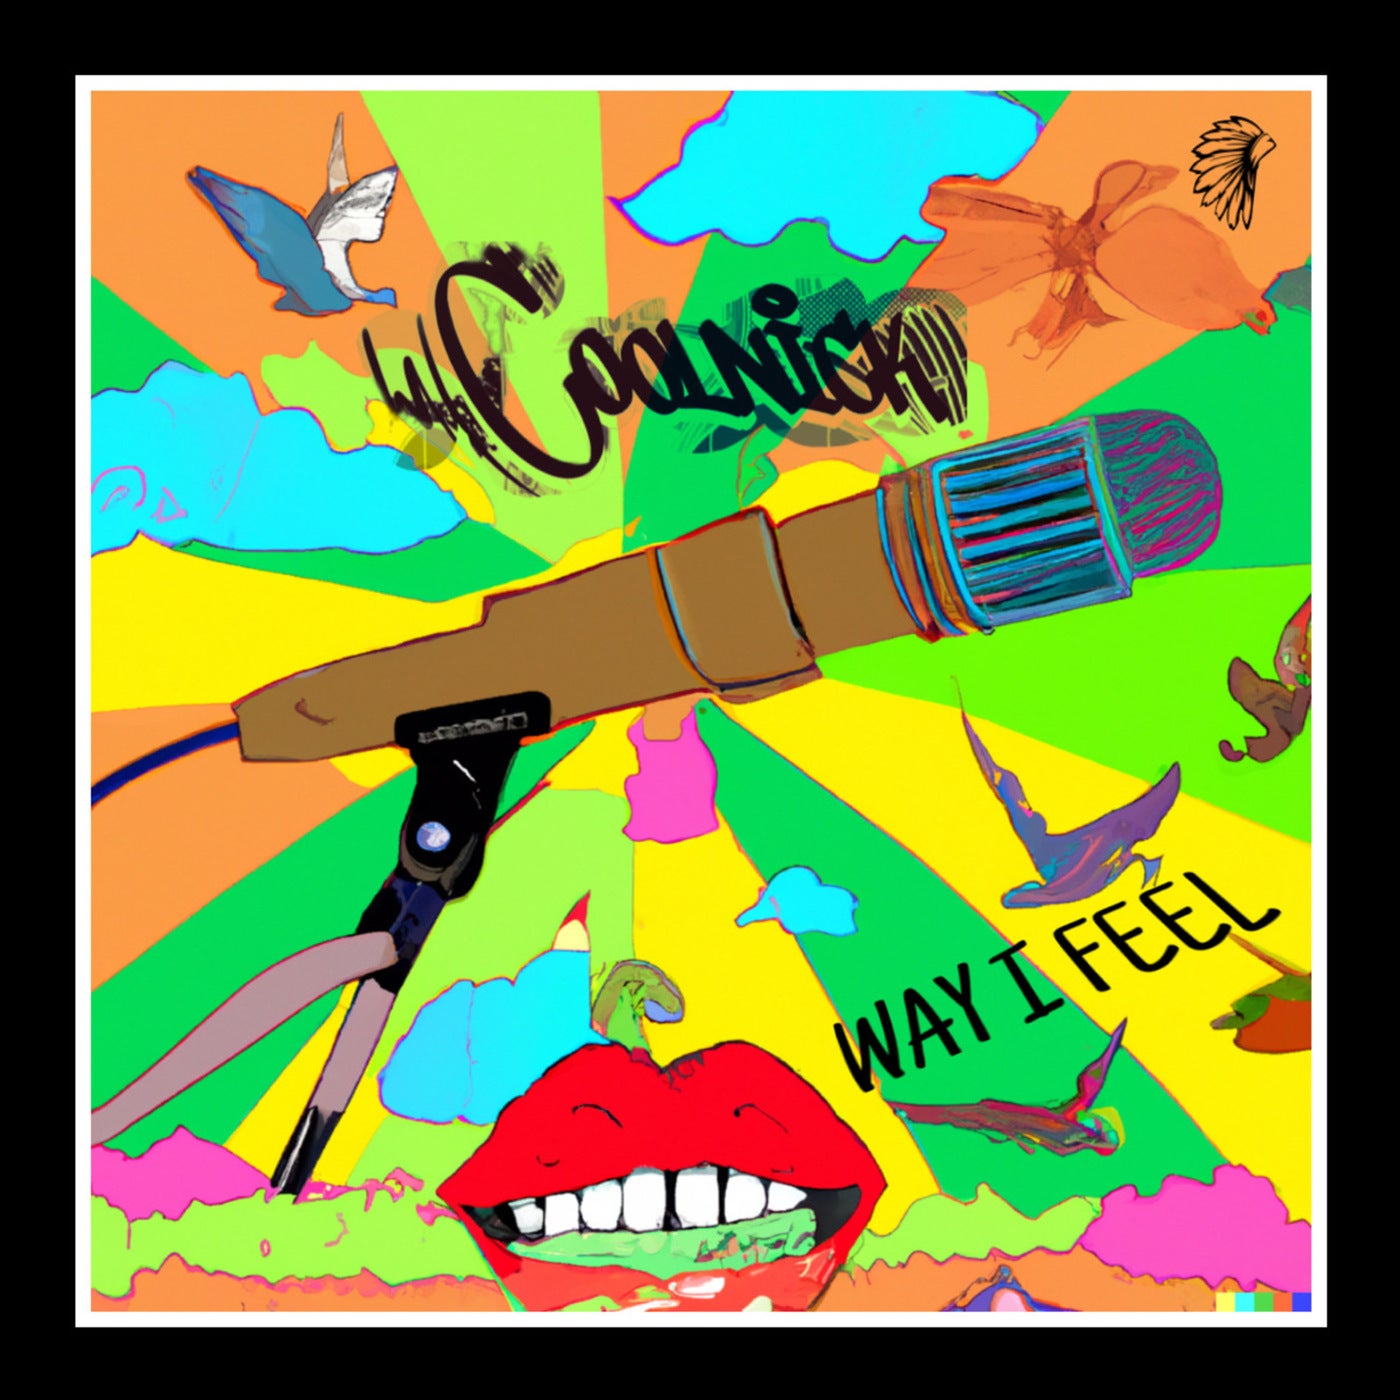 Coolnick – Way I Feel (Original Mix) [GCR009]